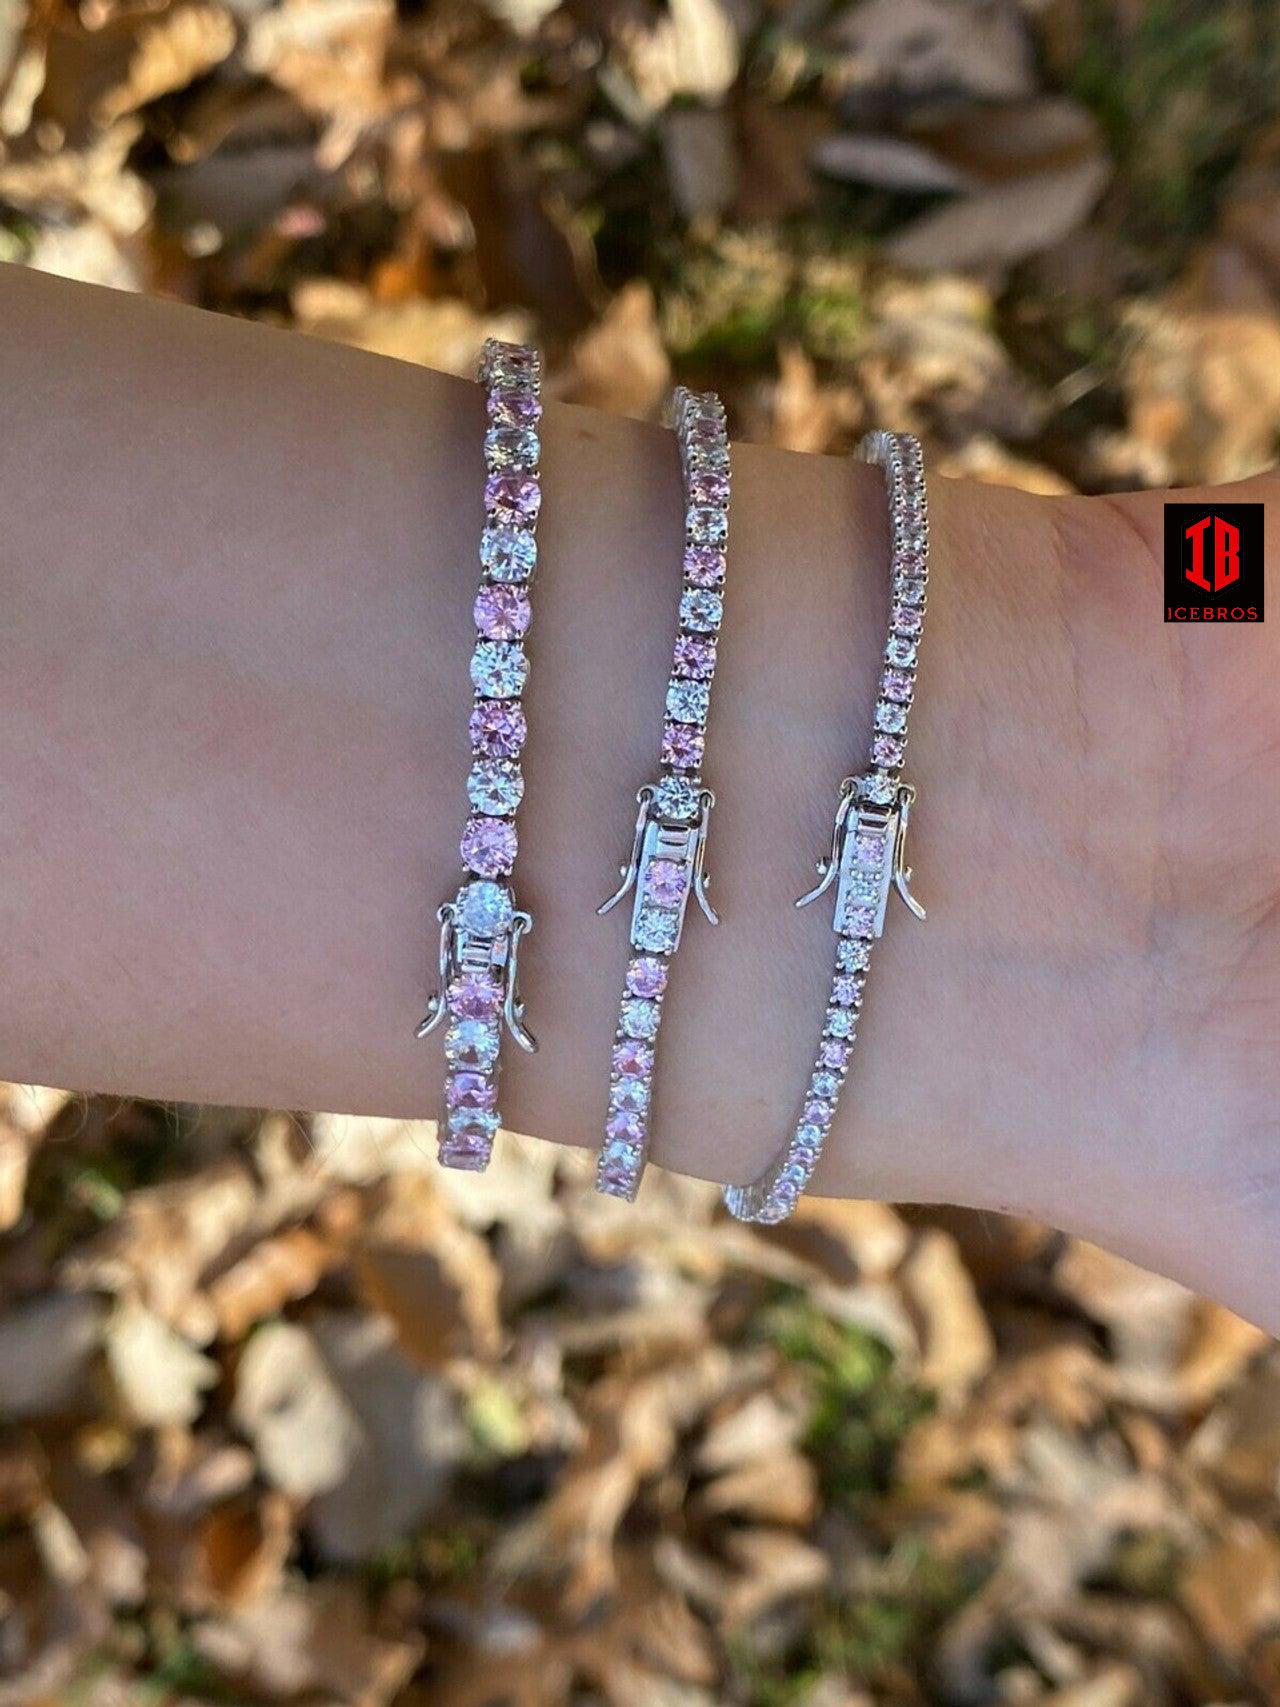 Tennis Bracelet SOLID 925 Sterling Silver Single Row Diamond & Pink Sapphire